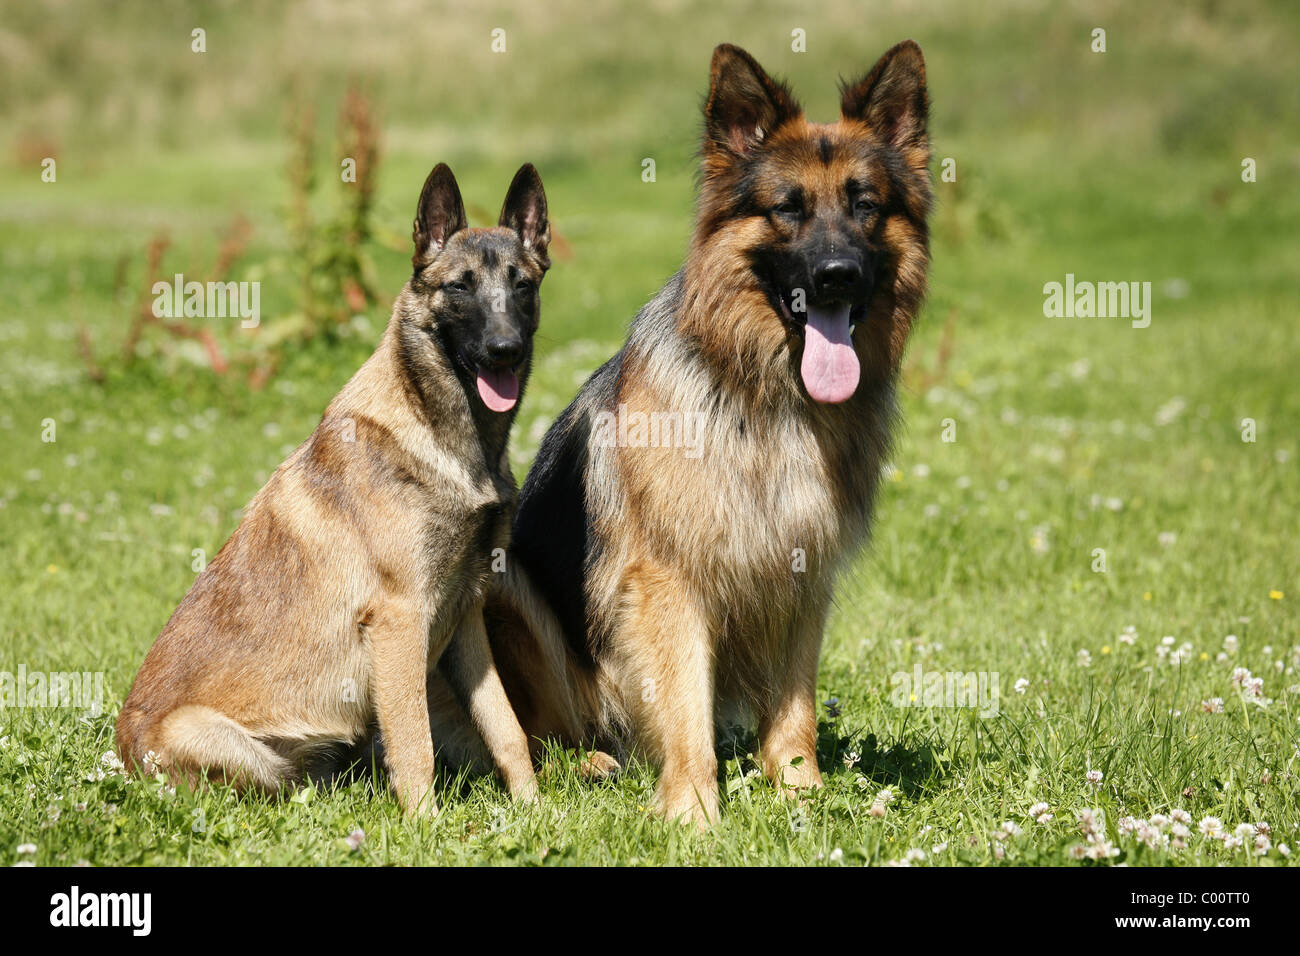 Belgian shepherd hund hi-res stock photography and images - Alamy